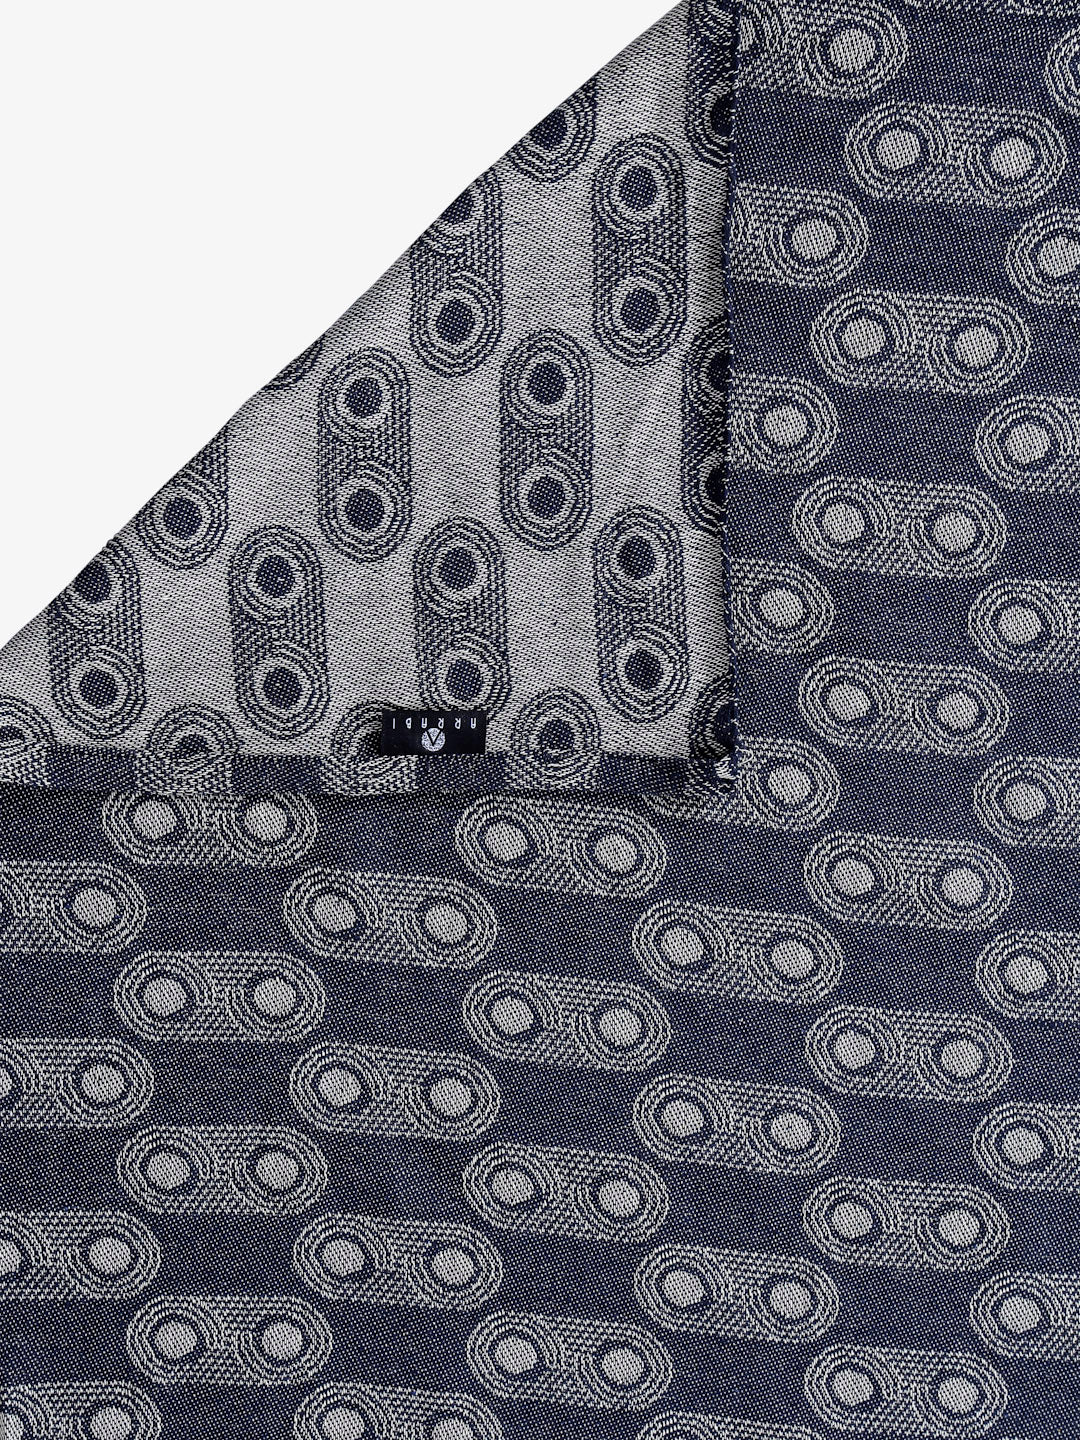 Arrabi Black Geometric Handwoven Cotton King Size Bedsheet with 2 Pillow Covers (260 X 230 cm)